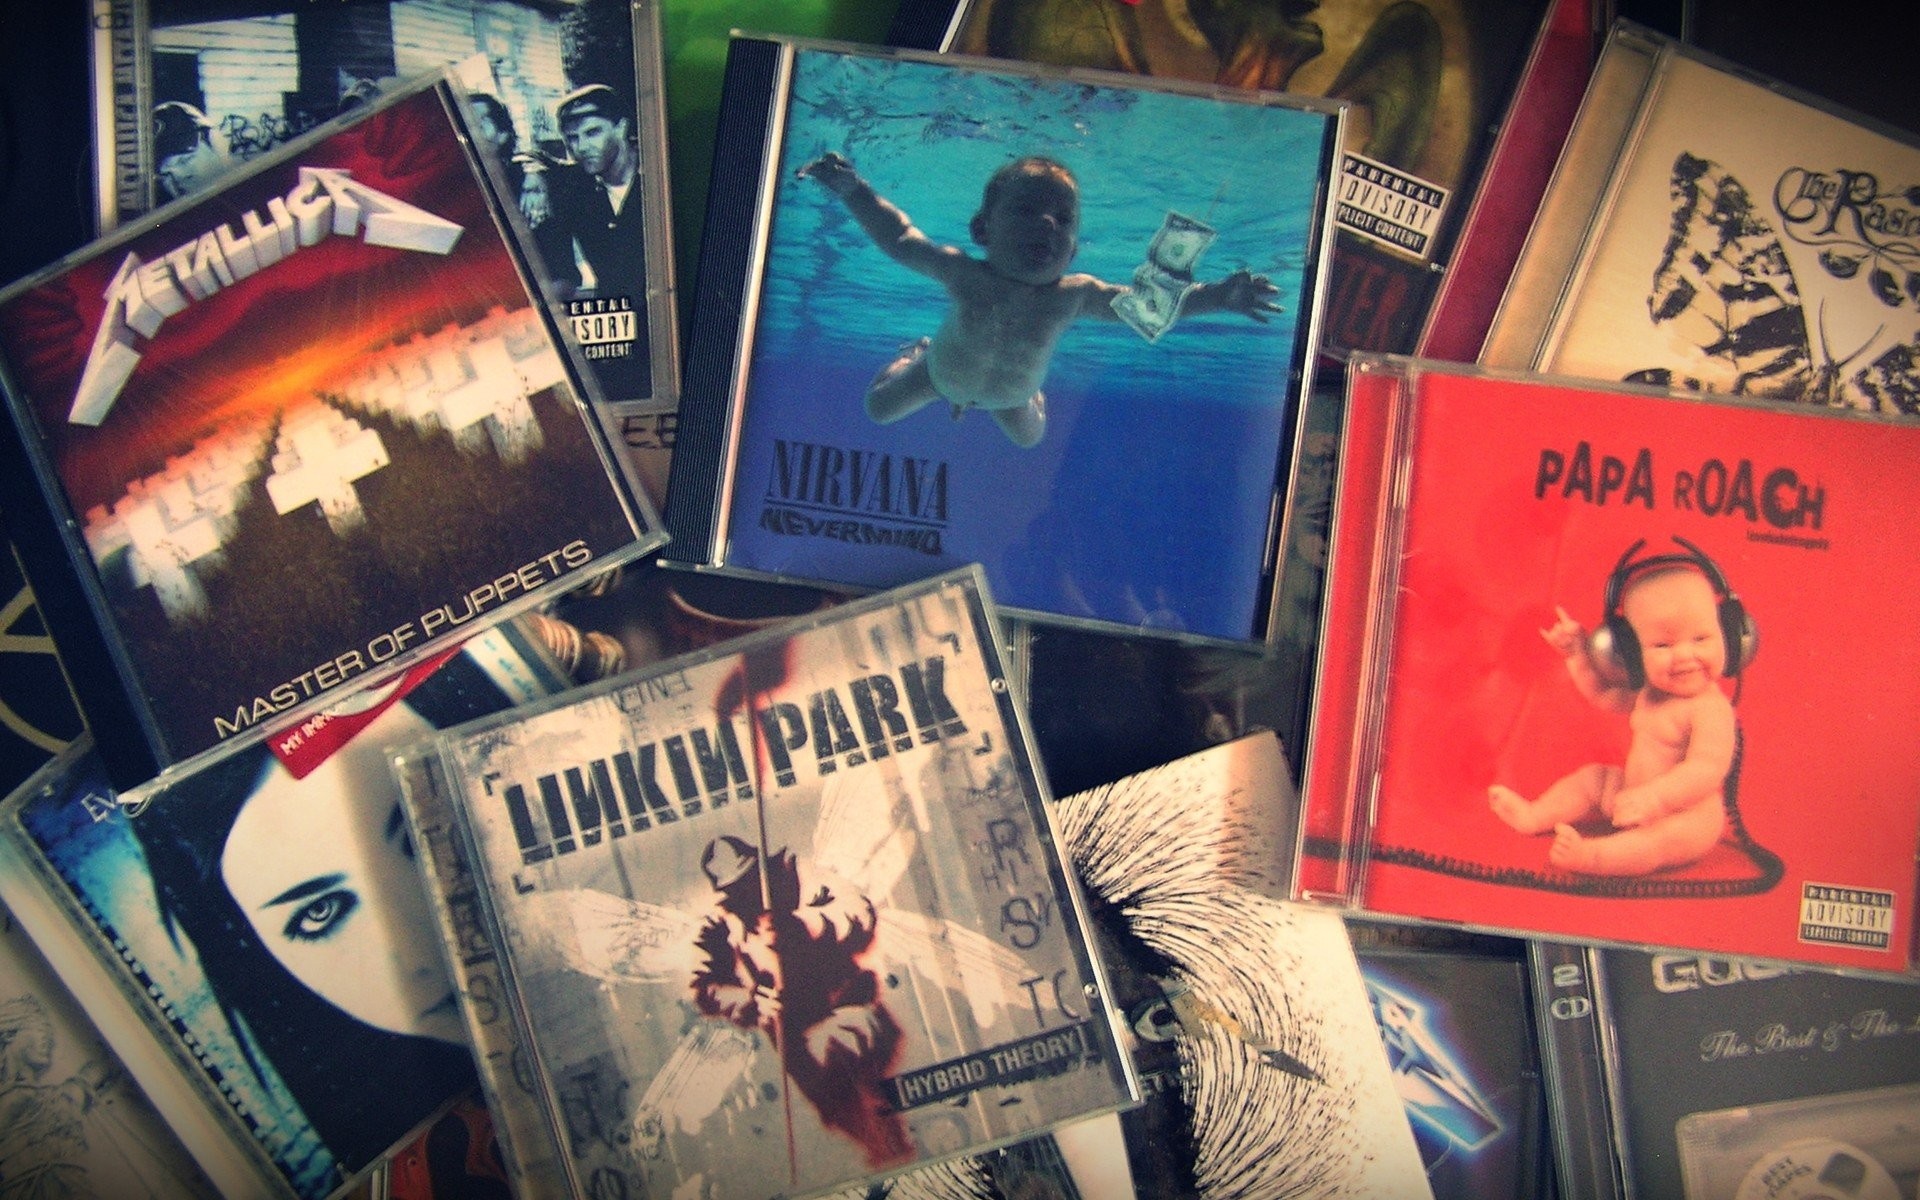 Album Covers Compact Disc Linkin Park Metallica Nirvana Papa Roach Rocks